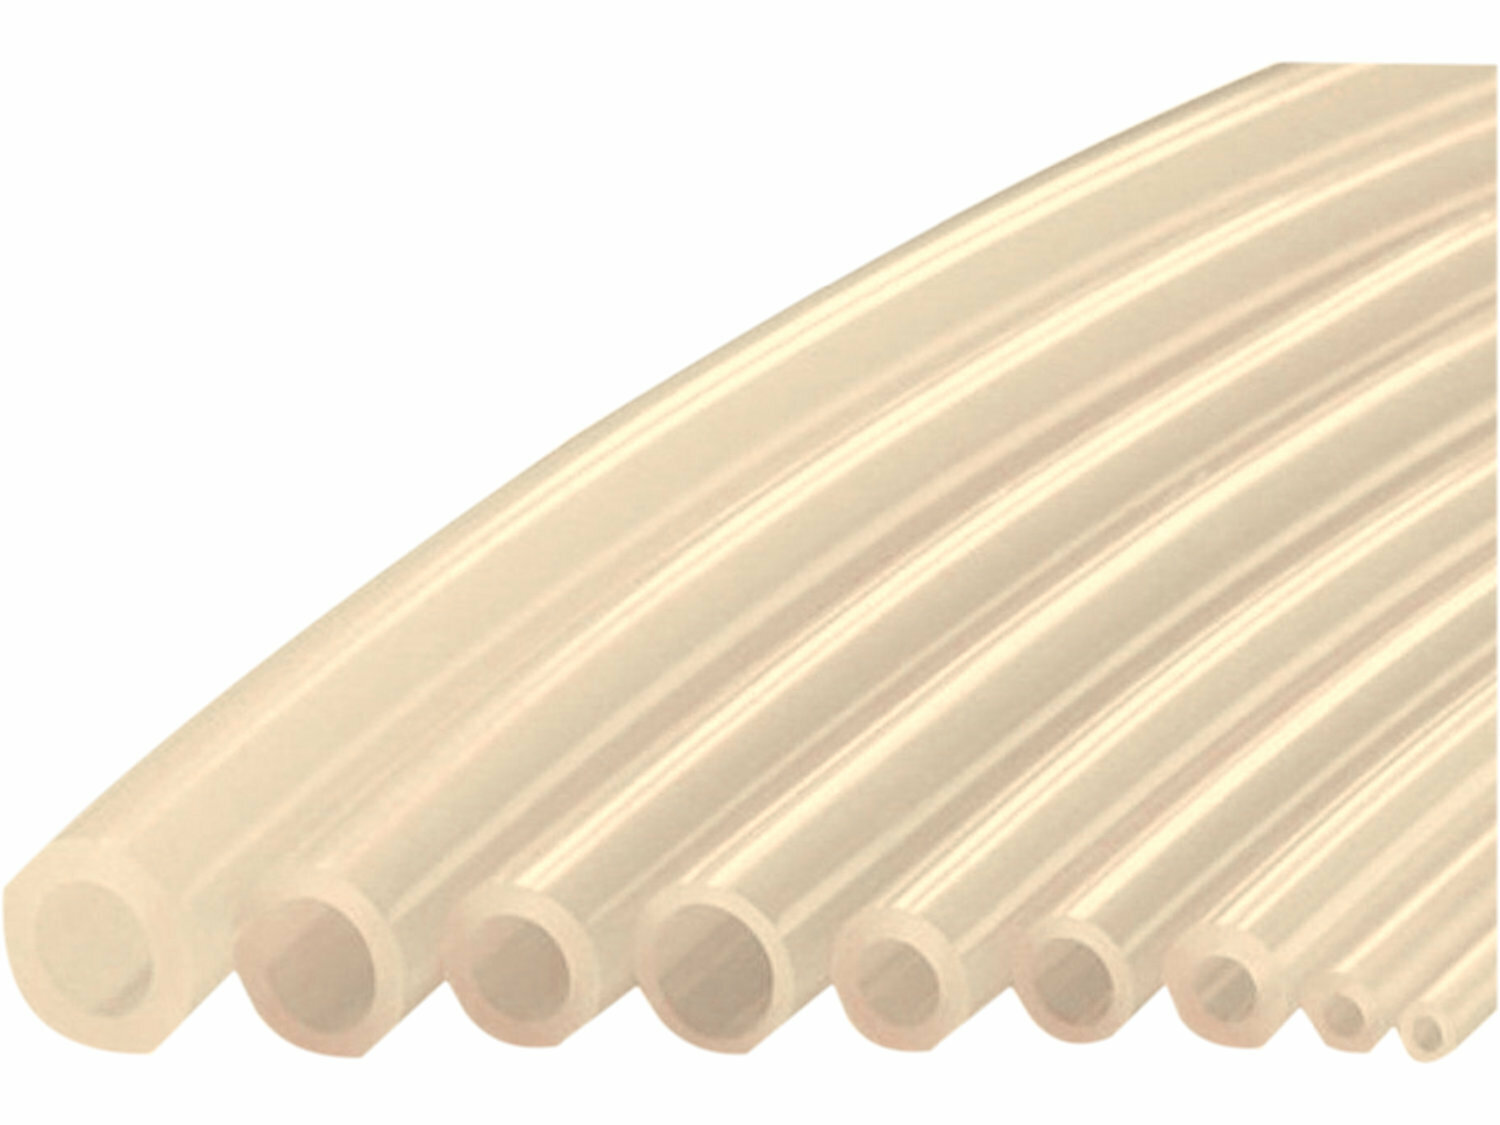 Трубка силиконовая 140*25 (14 мм внутренний диаметр 25 мм стенка) длина 1 метр